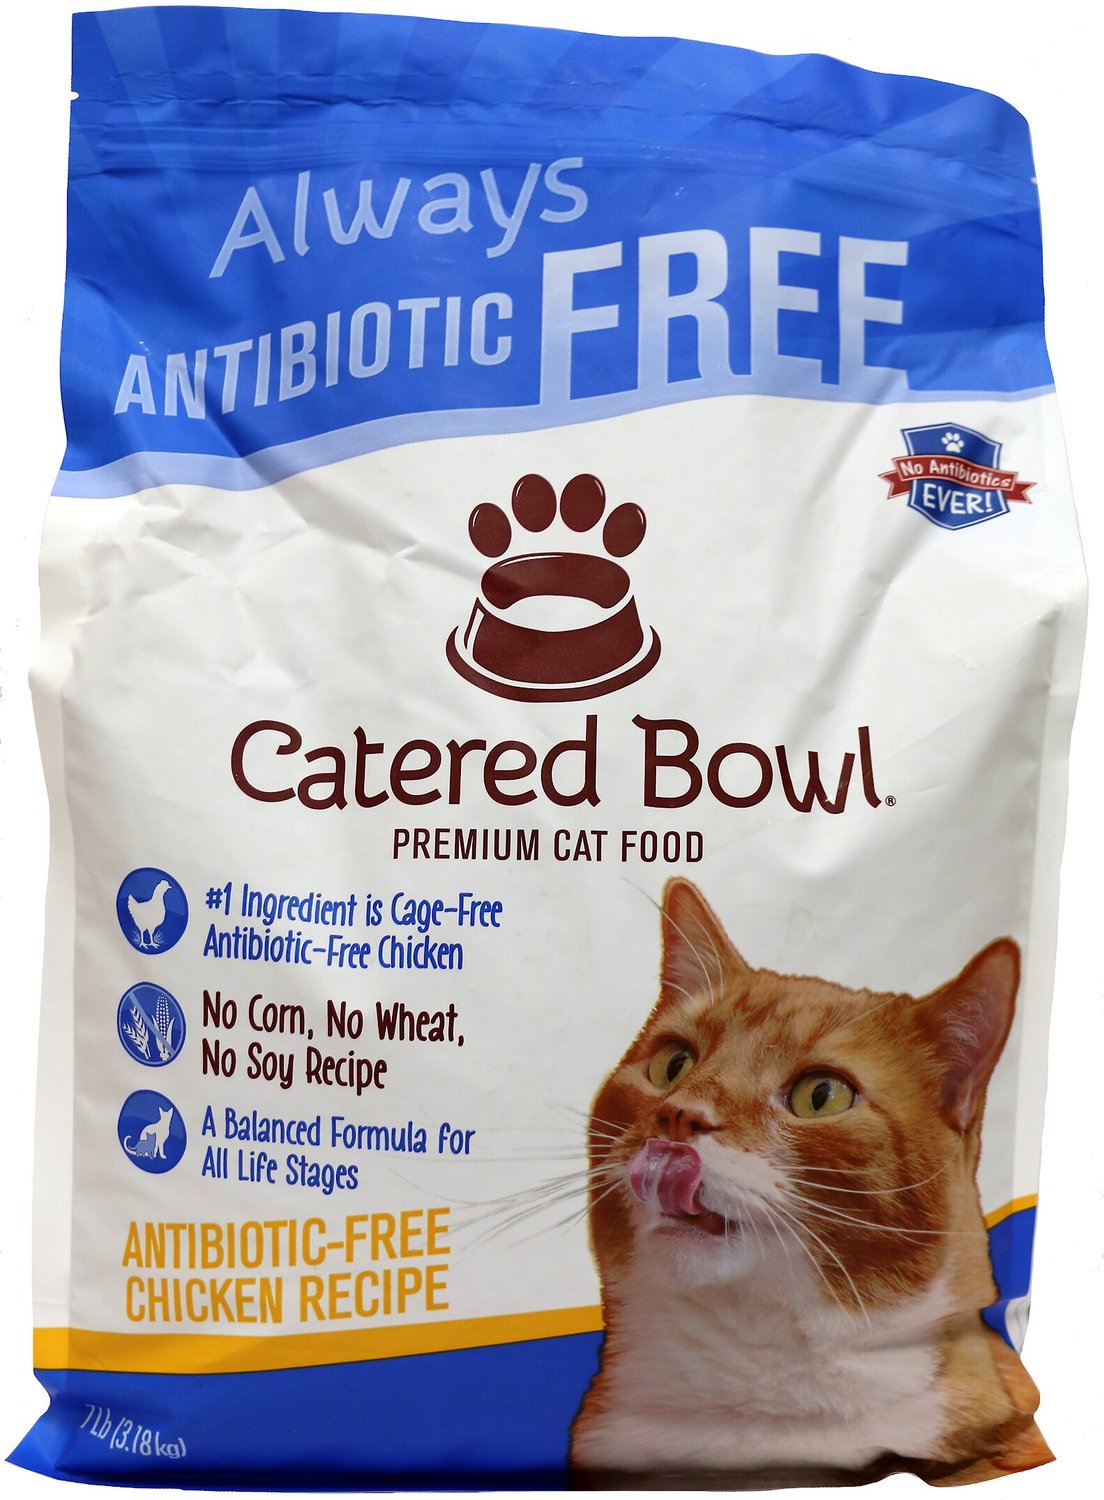 CATERED BOWL AntibioticFree Chicken Recipe Dry Cat Food , 7lb bag